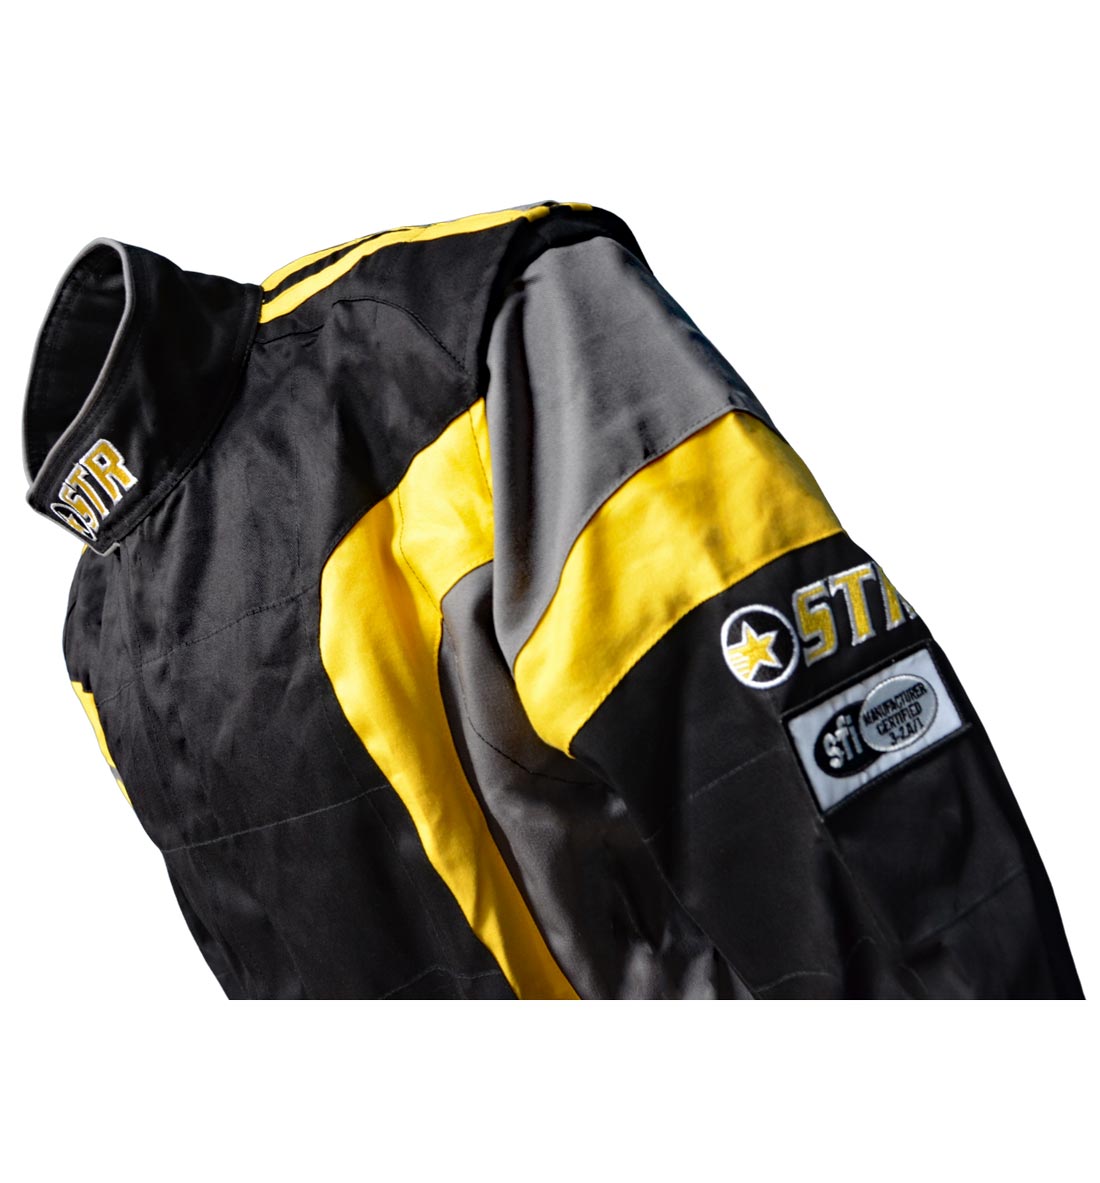 STR 'Podium' Race Suit - Black/Yellow/Grey